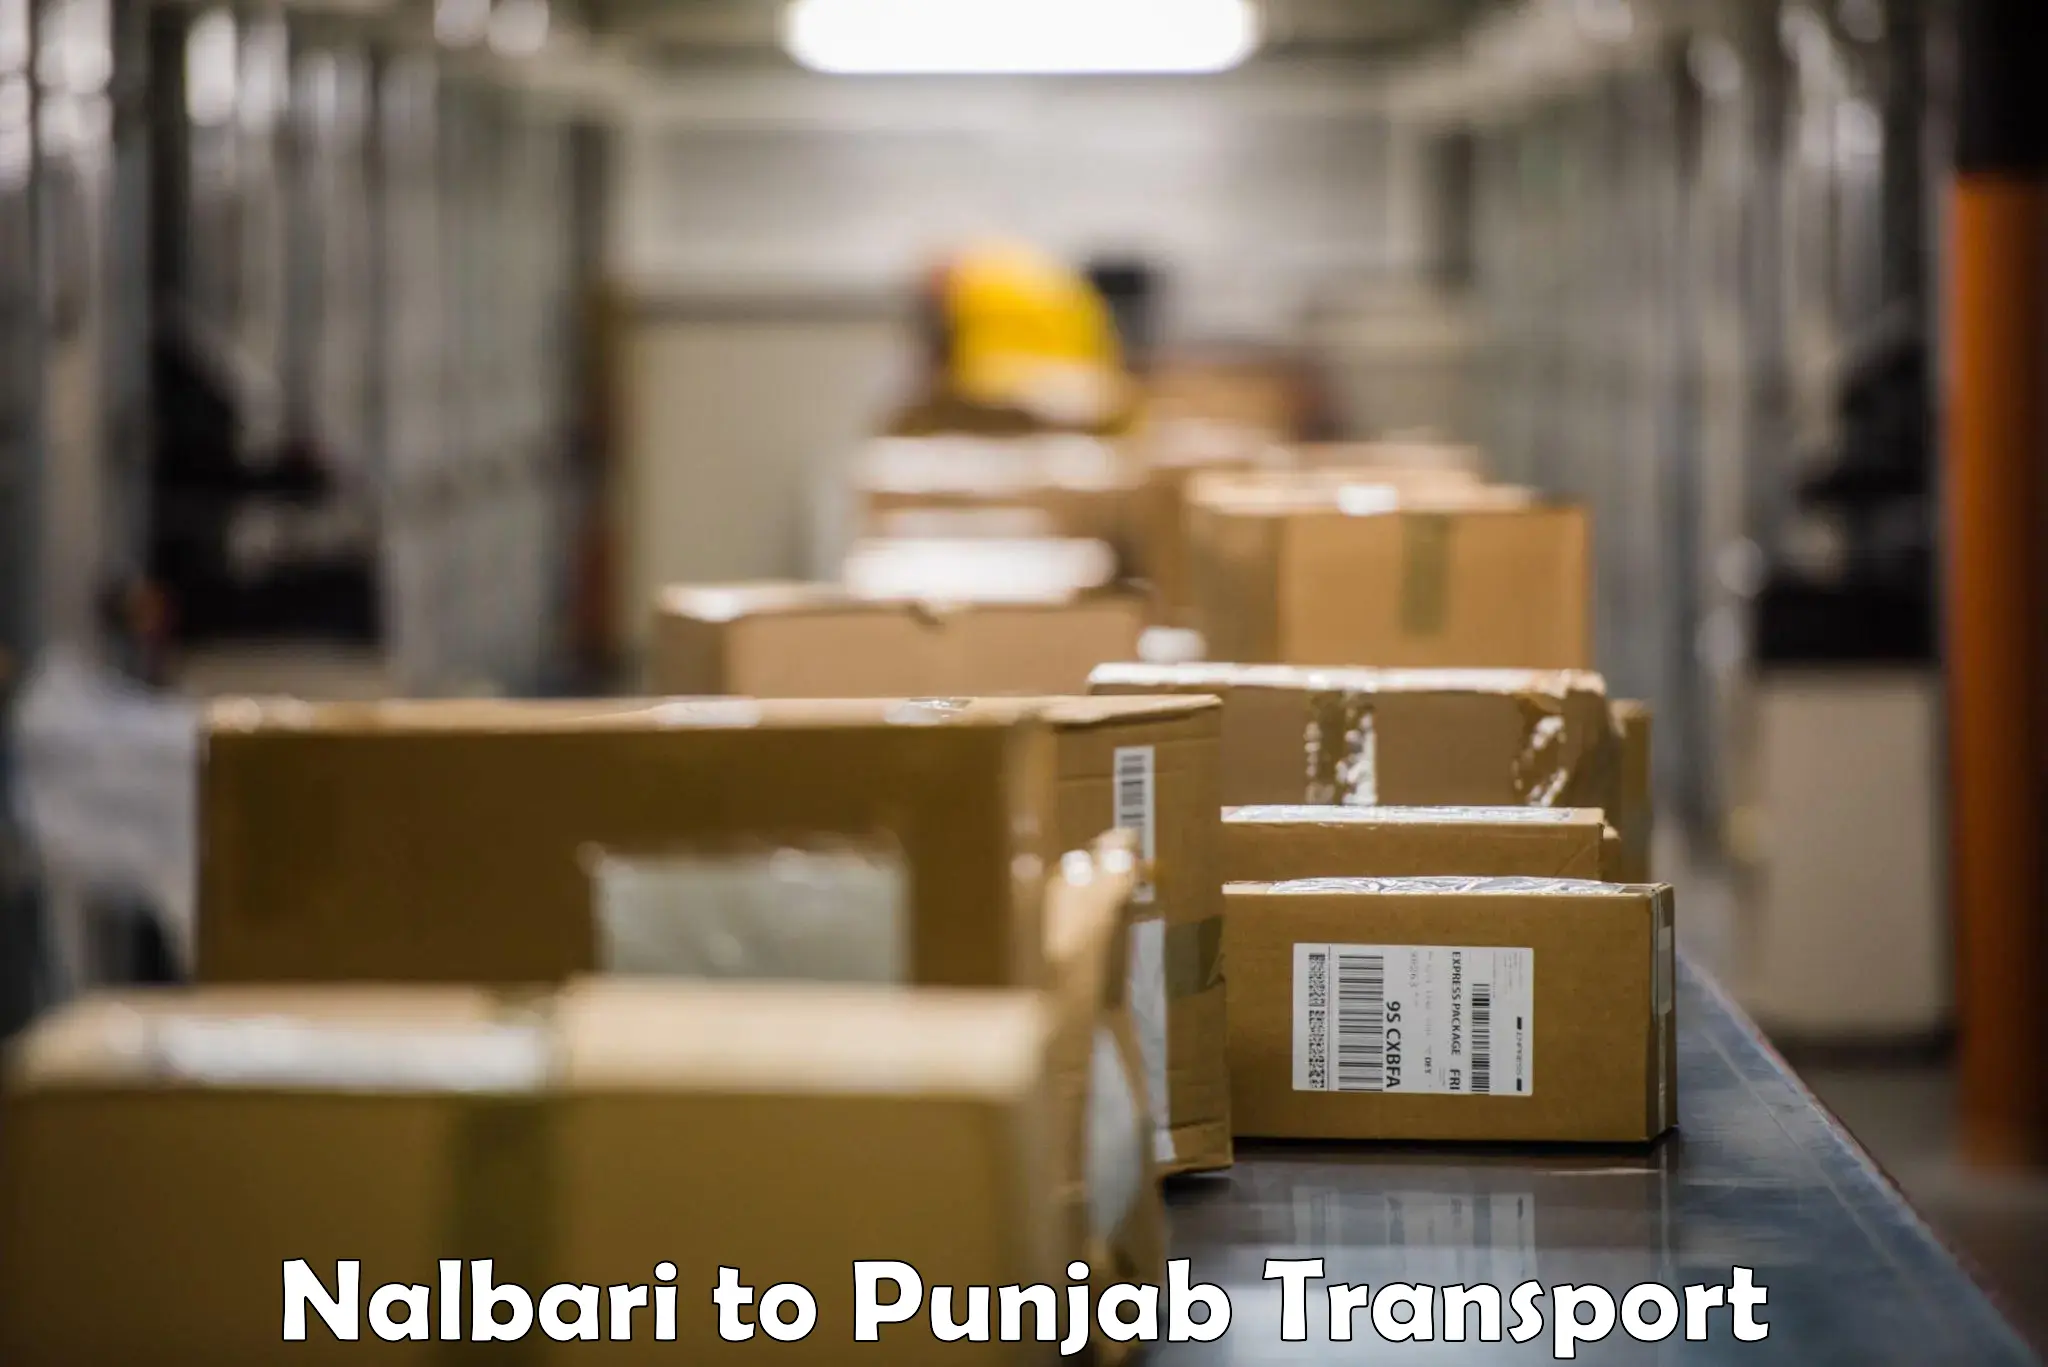 Shipping partner Nalbari to Nawanshahr